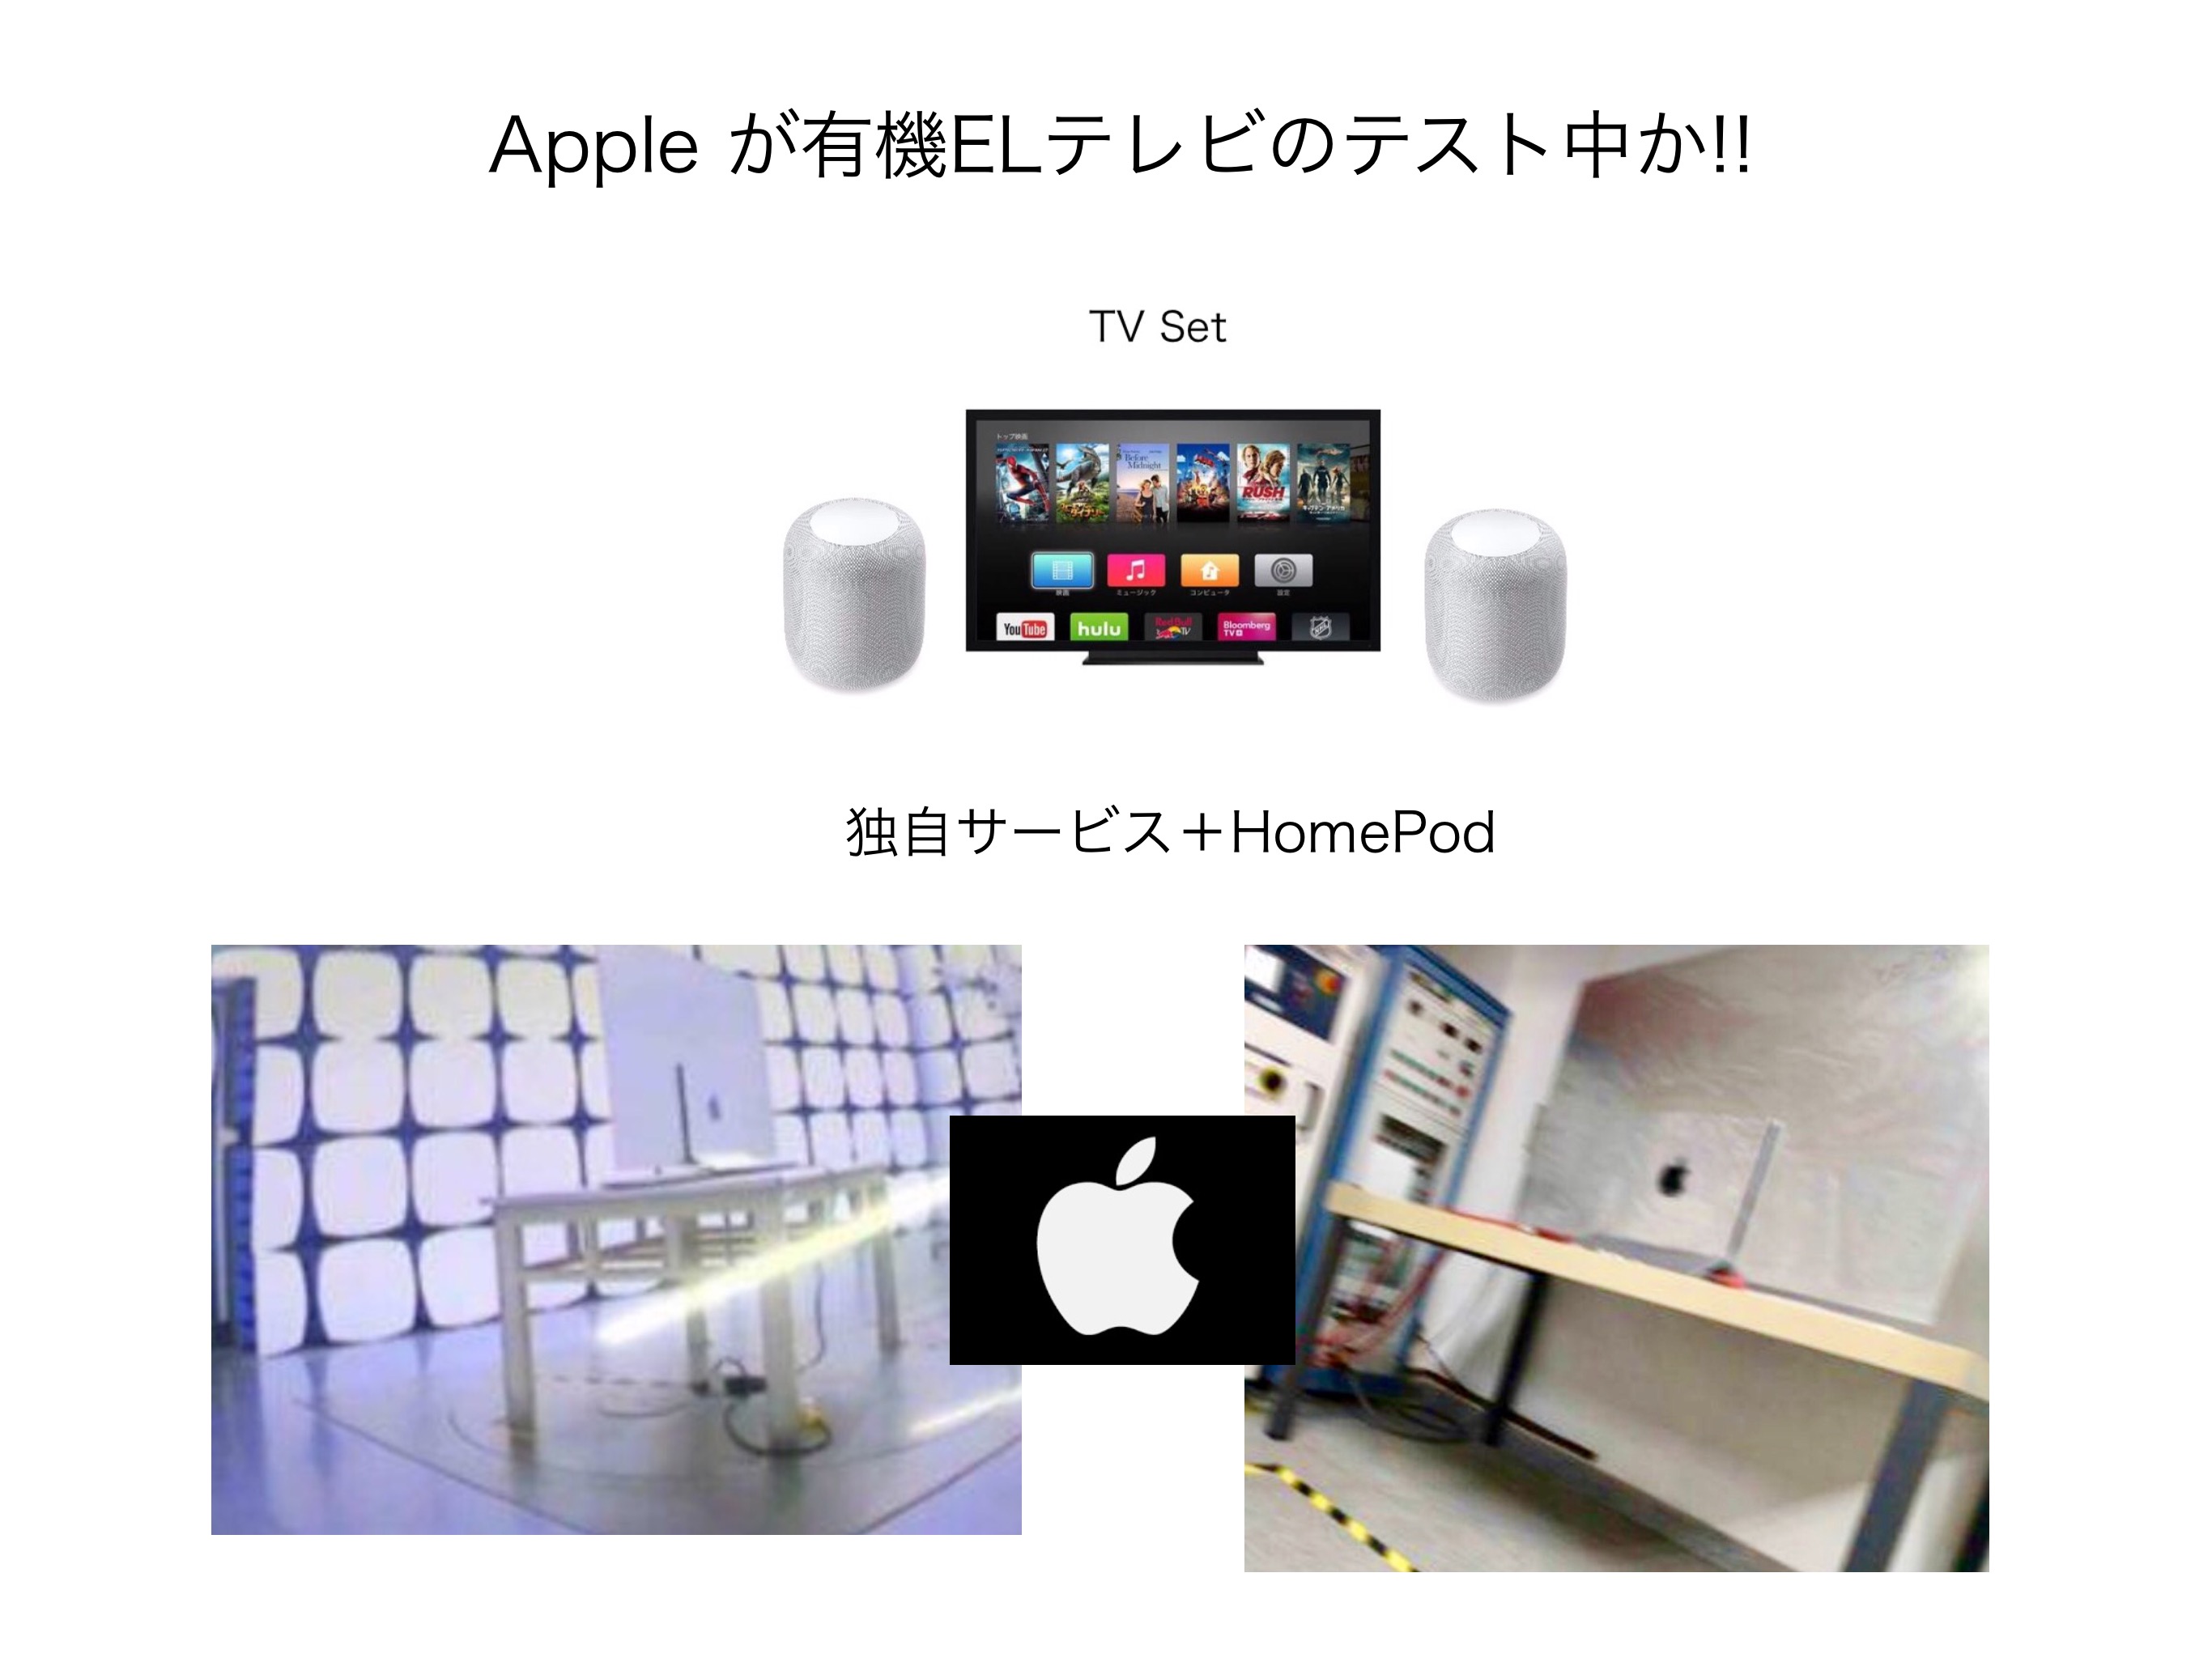 Apple TV PLUS 